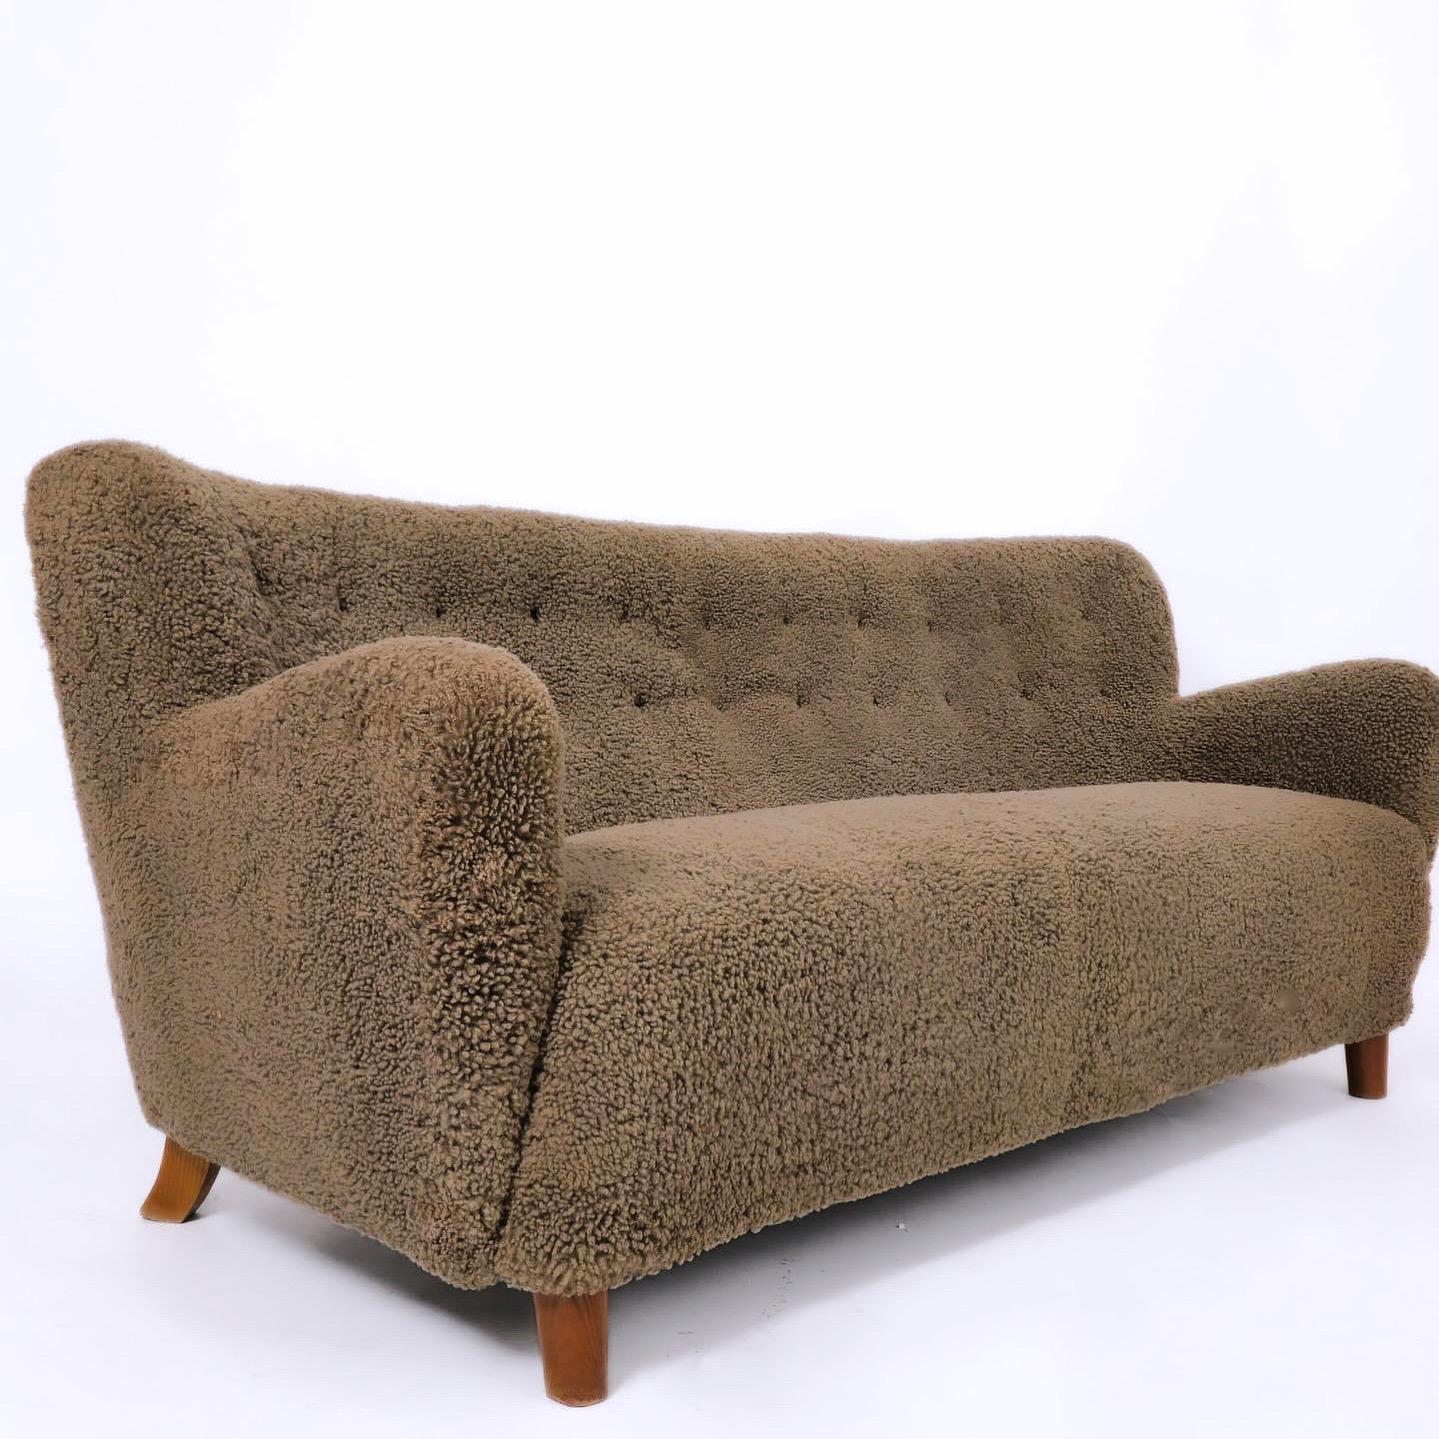 Freshly reupholstered in a mushroom-toned sheepskin. Circa 1930s-40s cabinetmaker sofa imported from Denmark. Stunning.